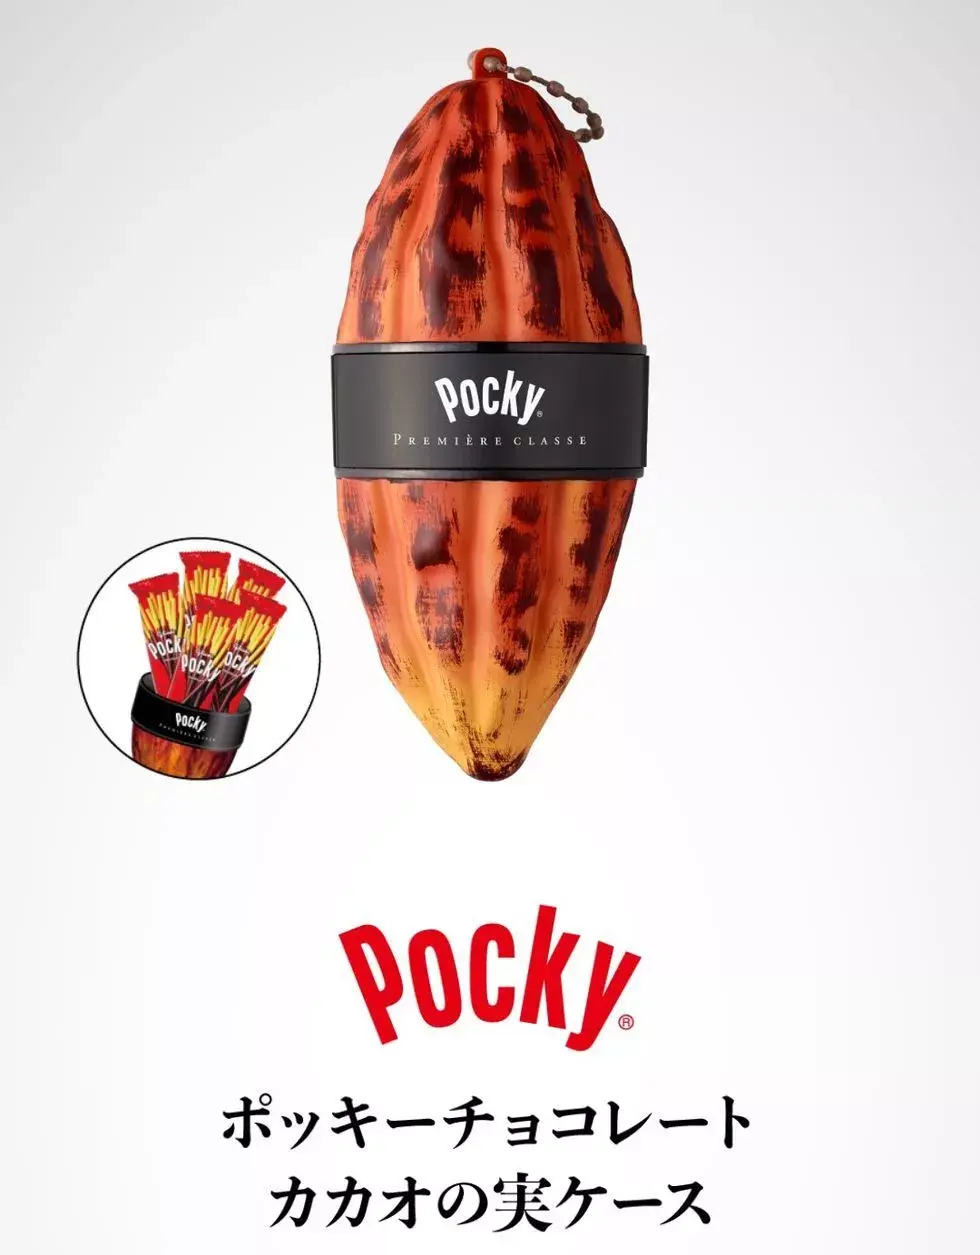 the hocky pocky shake图片